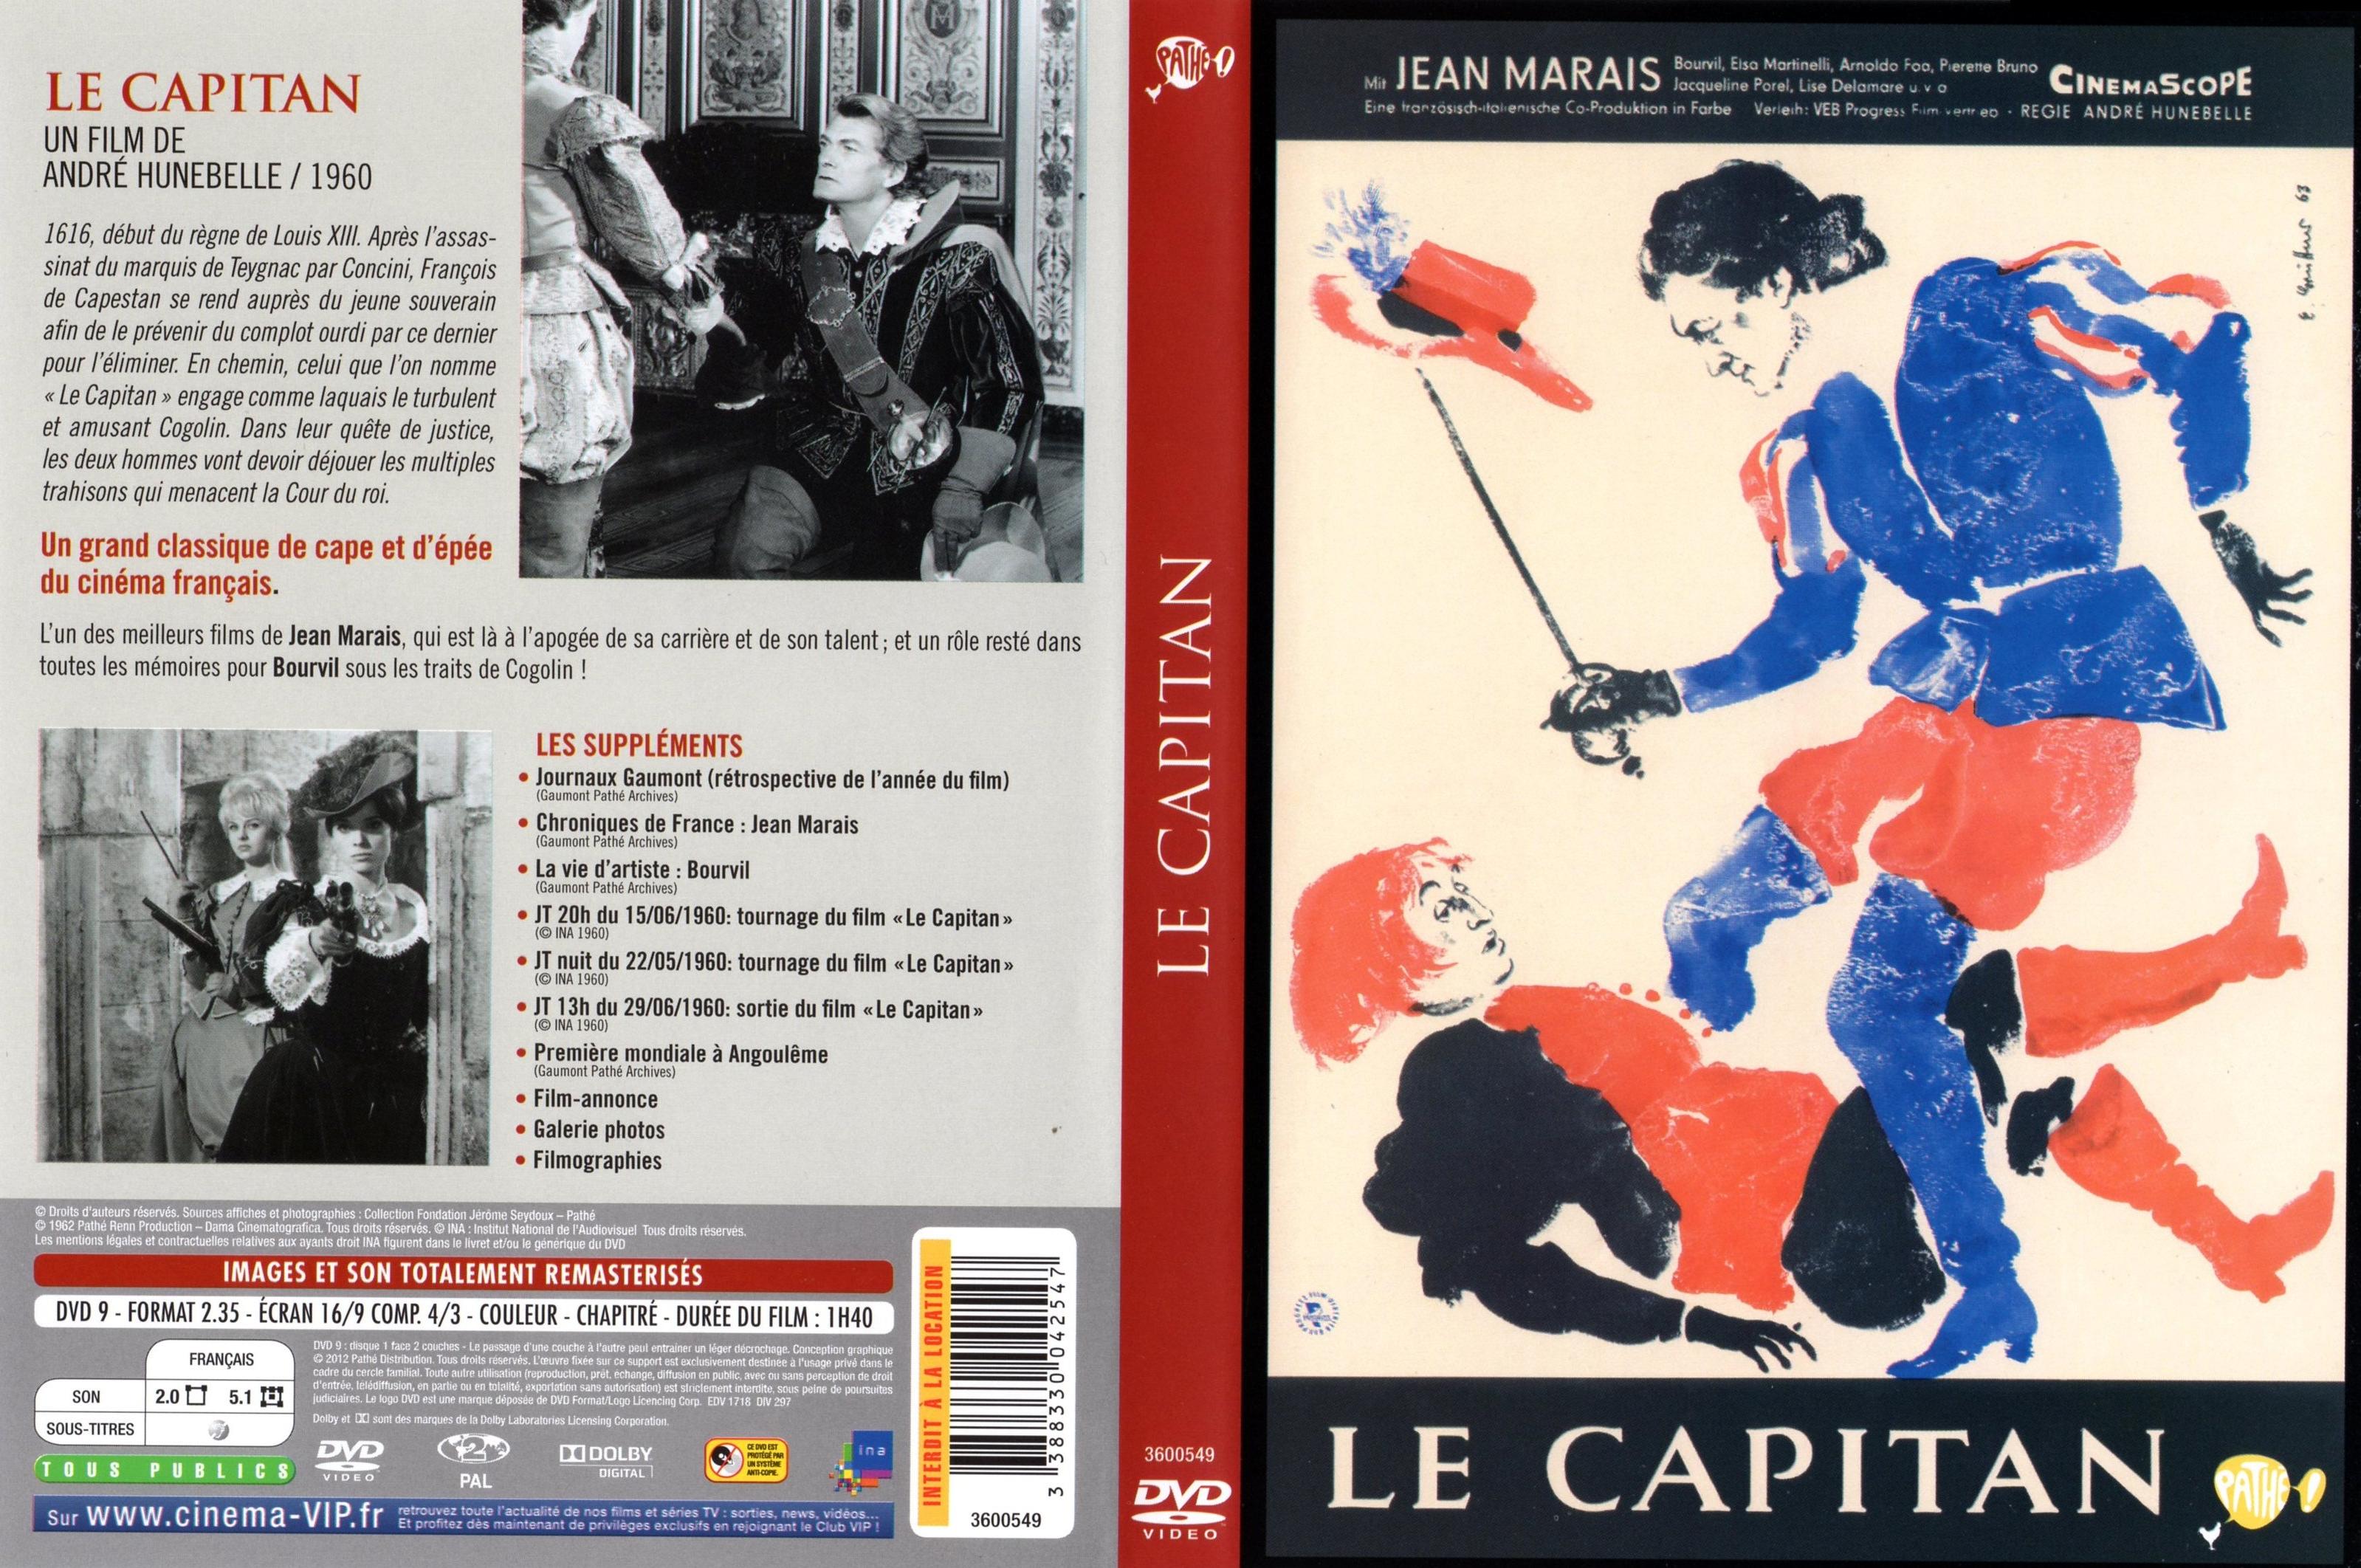 Jaquette DVD Le capitan v3